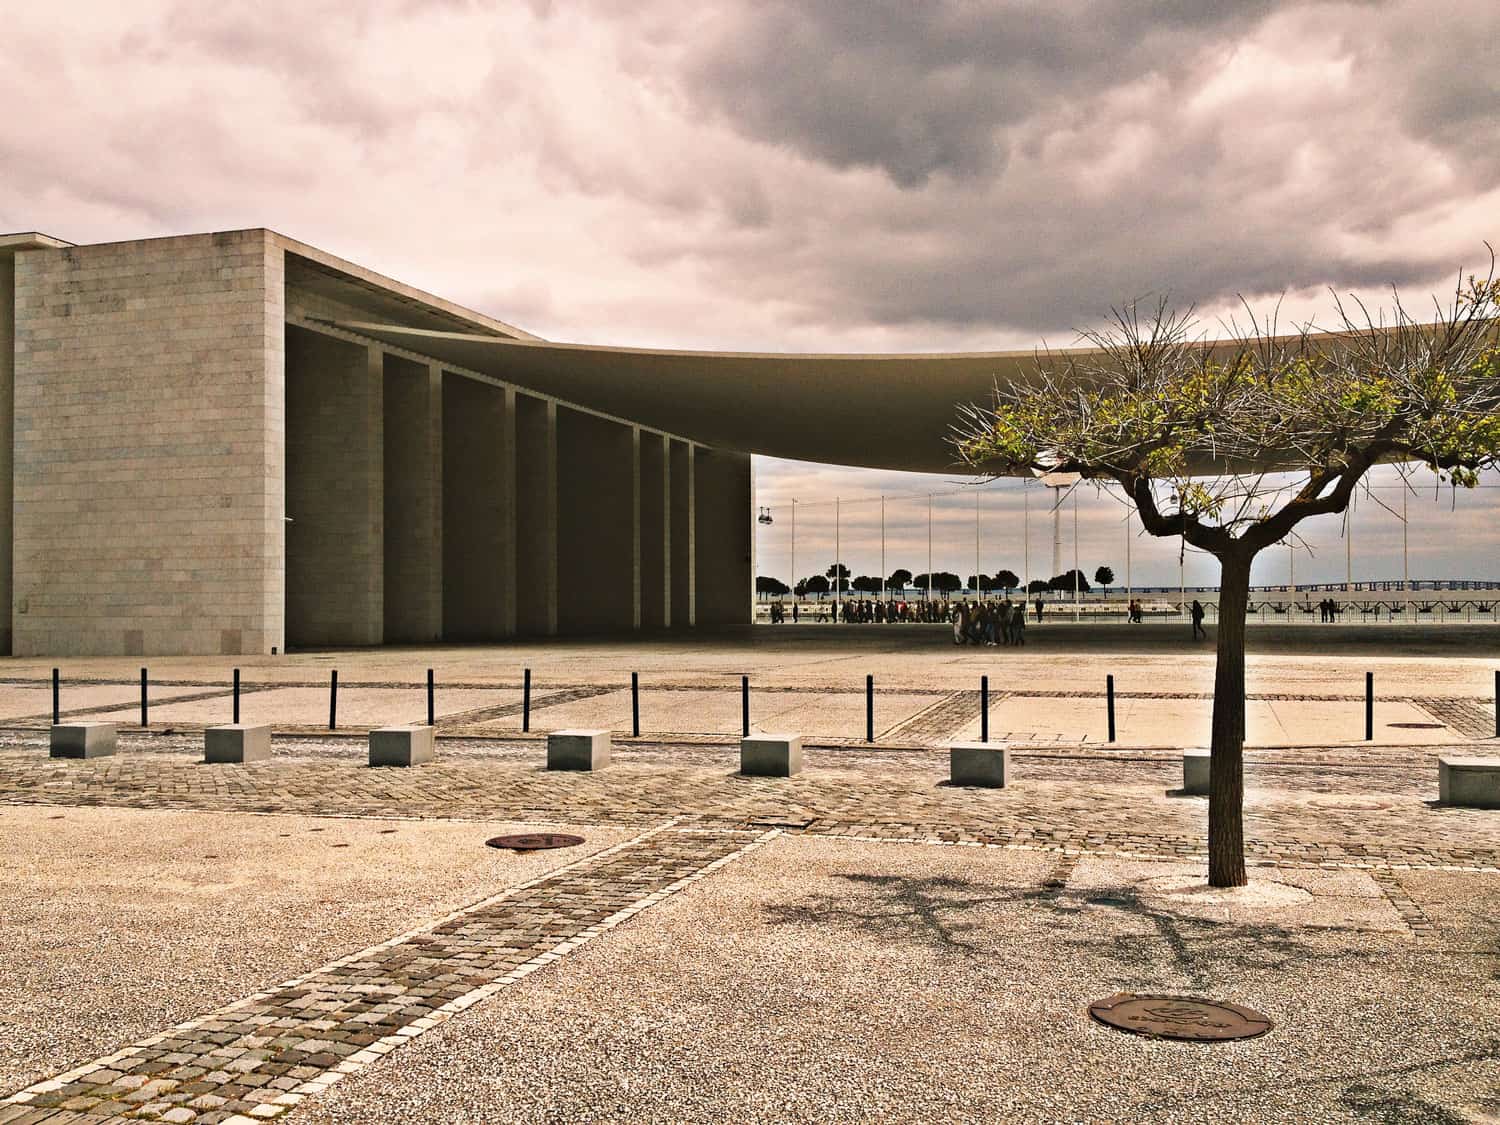 The Expo 98 Portuguese National Pavilion alvaro siza archute 1